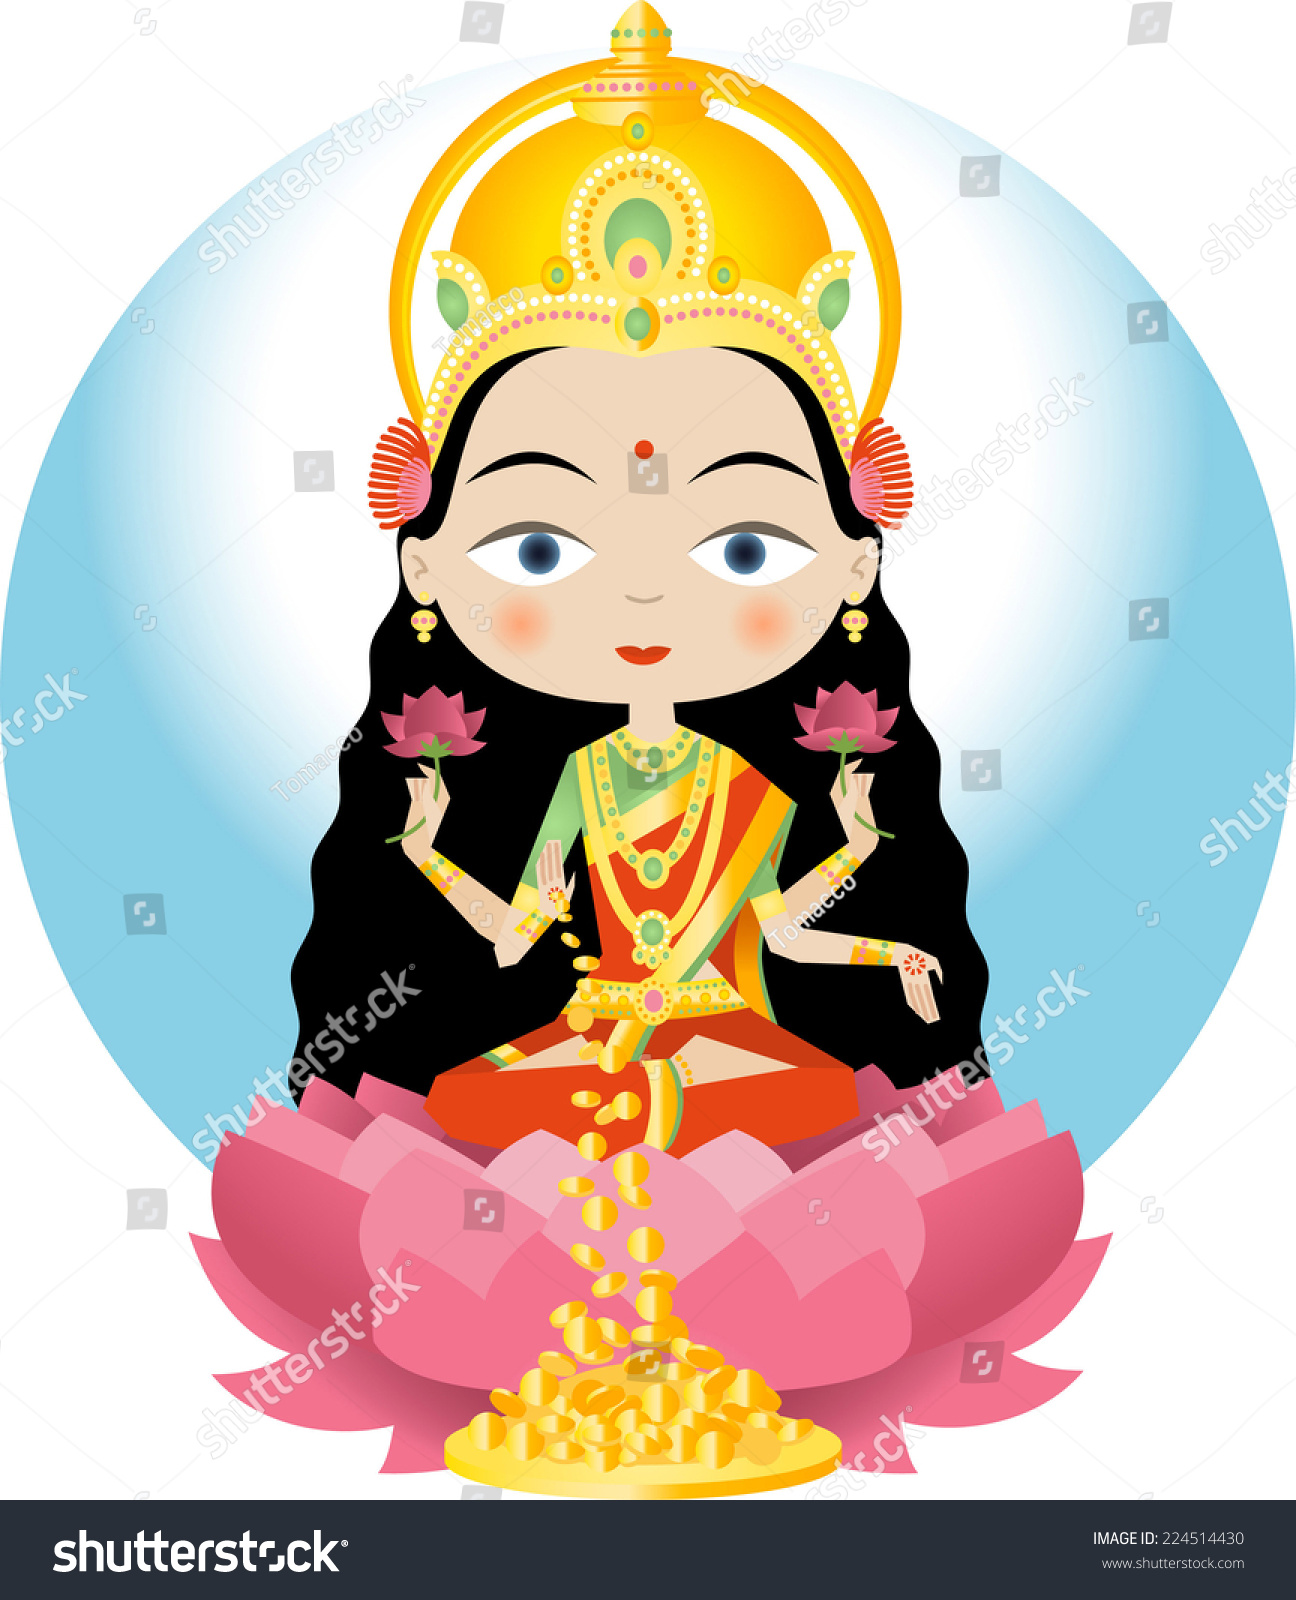 Lakshmi | God illustrations, Diwali festival of lights, Cartoon sketches